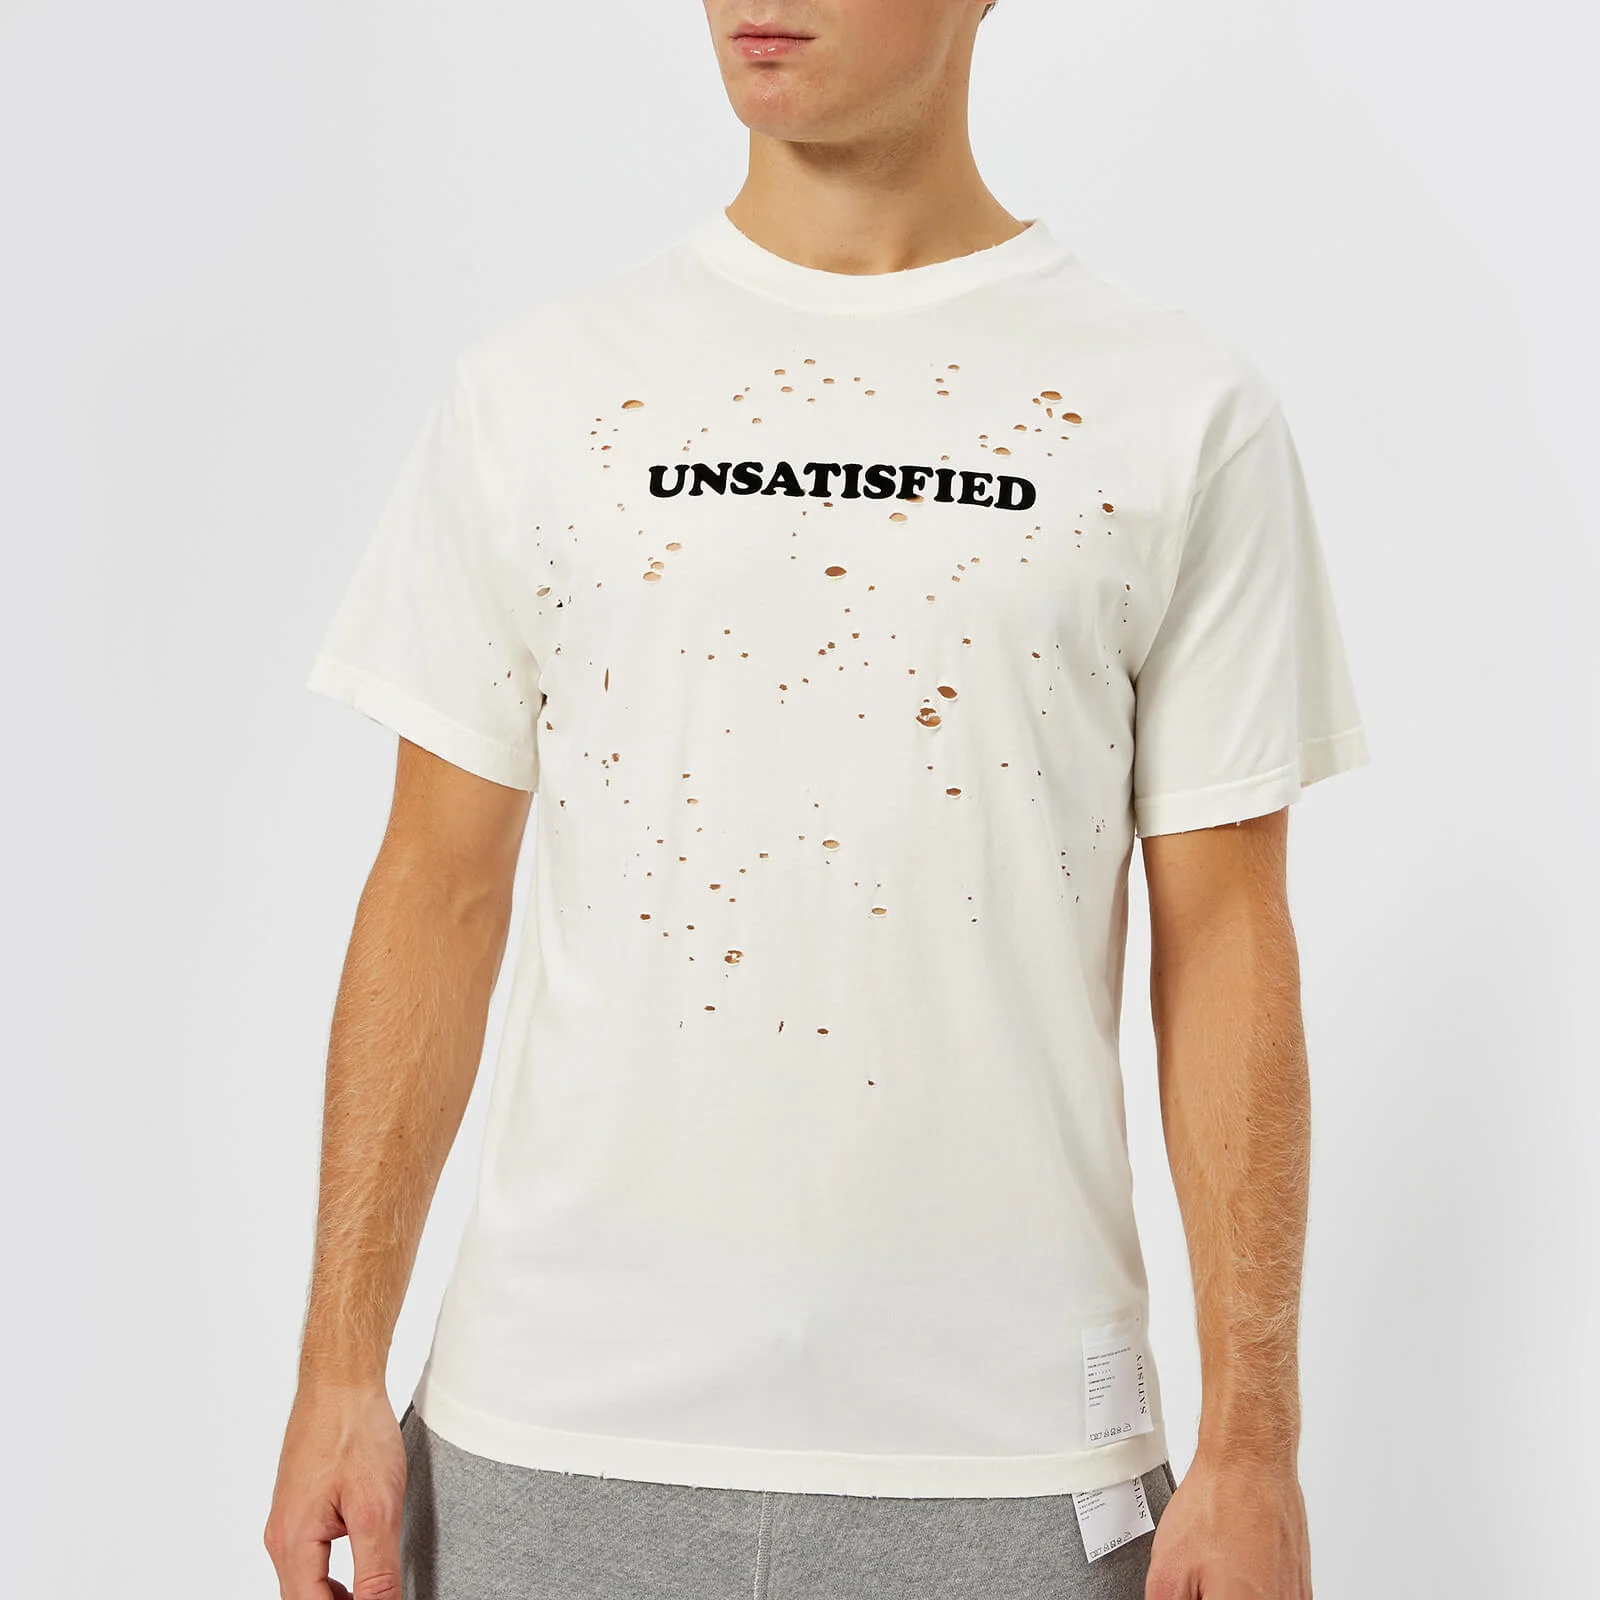 Satisfy Men's Unsatisfied Moth Eaten T-Shirt - Off White Image 1